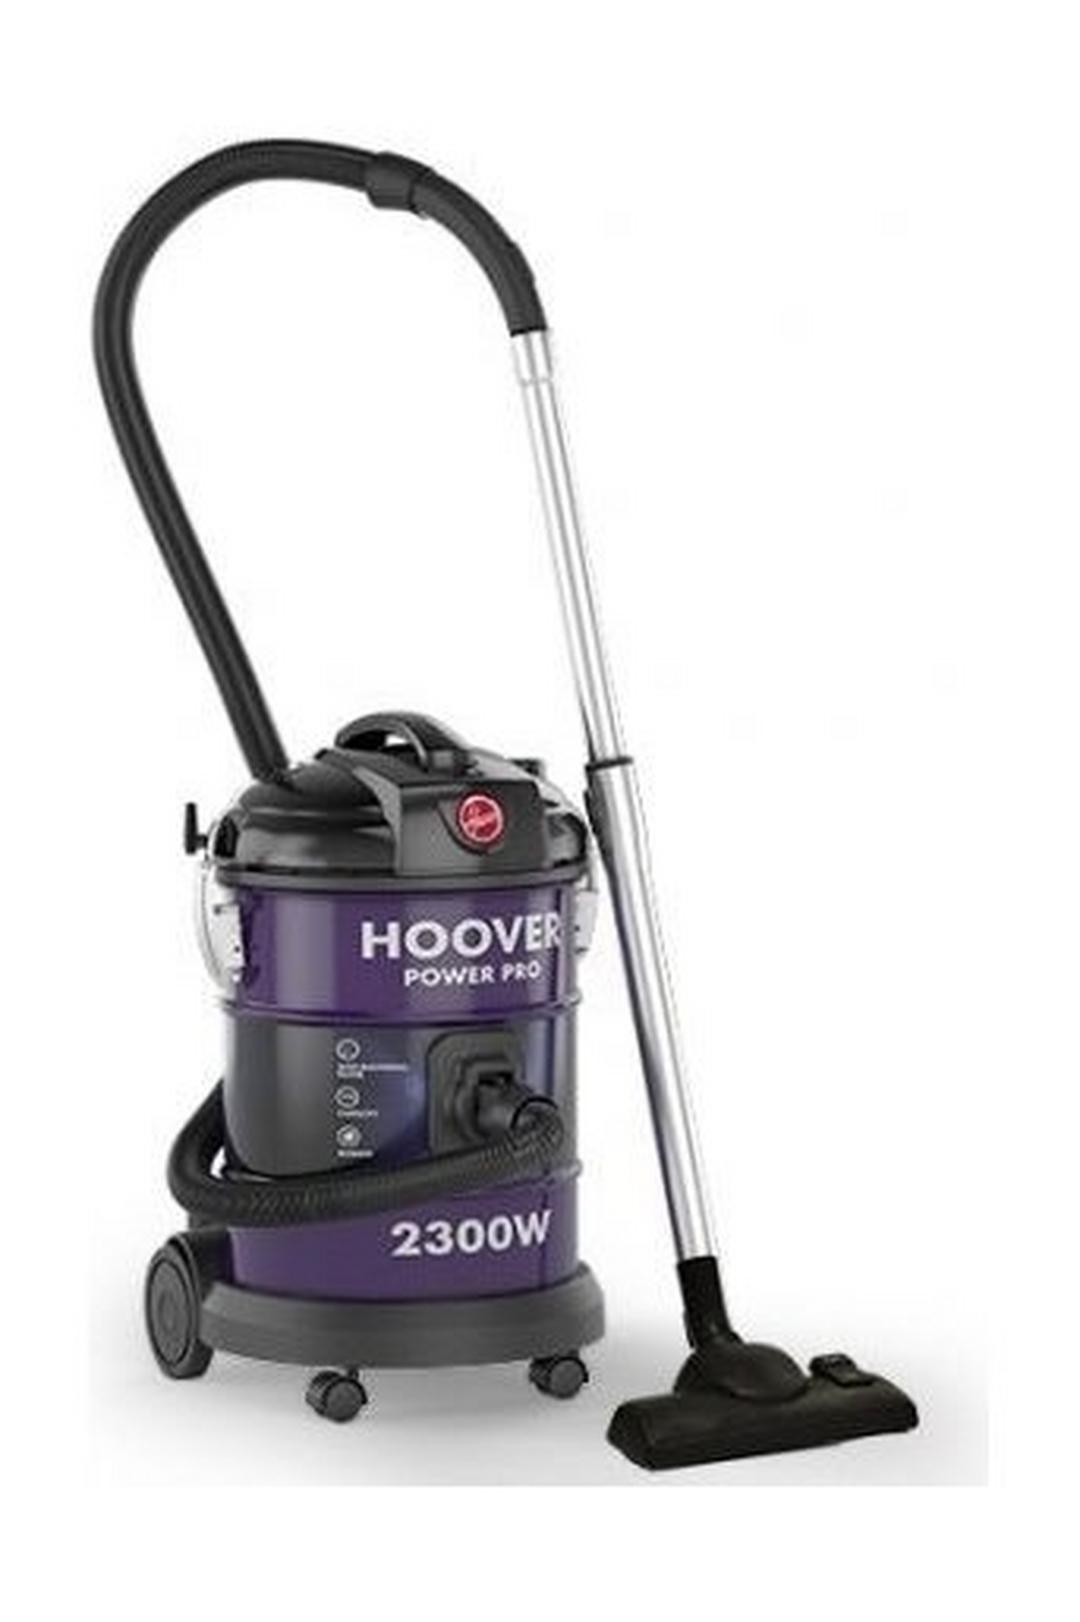 Hoover Power Pro Drum Vacuum Cleaner 2300W (HT85-T3-ME) - Violet